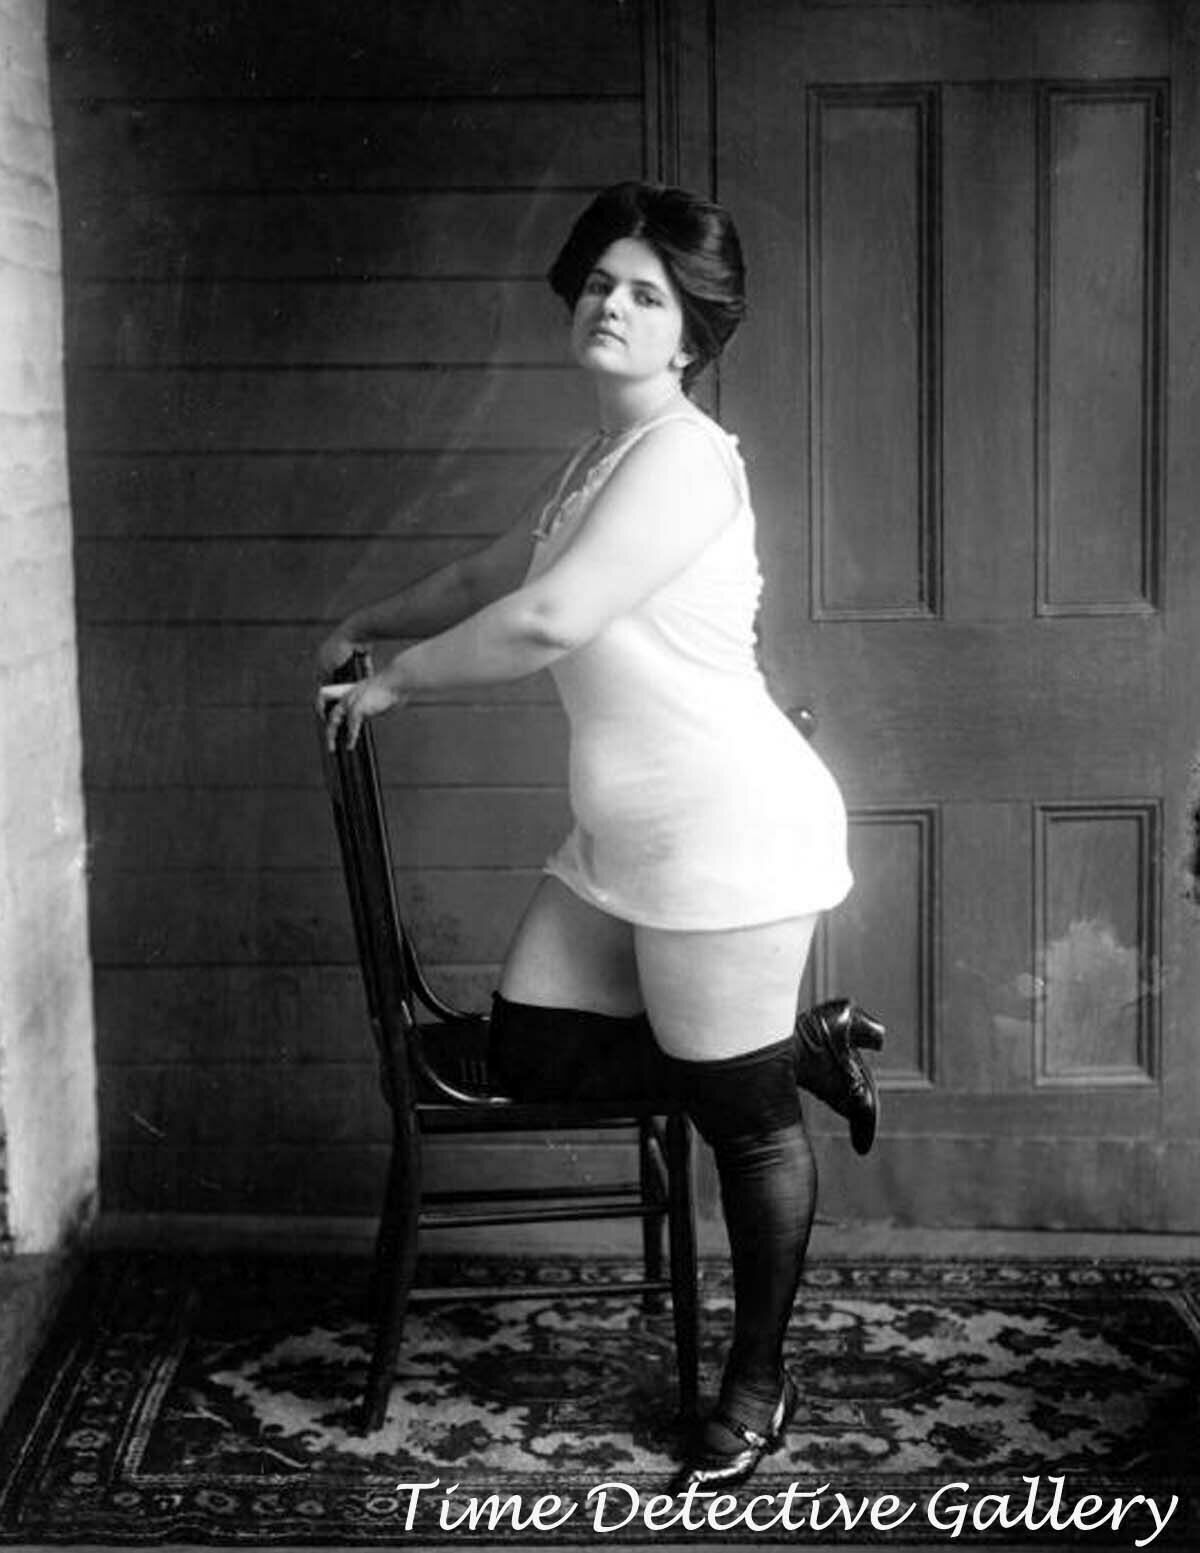 Storyville Prostitute #1 by E.J. Bellocq, New Orleans, LA - Historic Photo Print